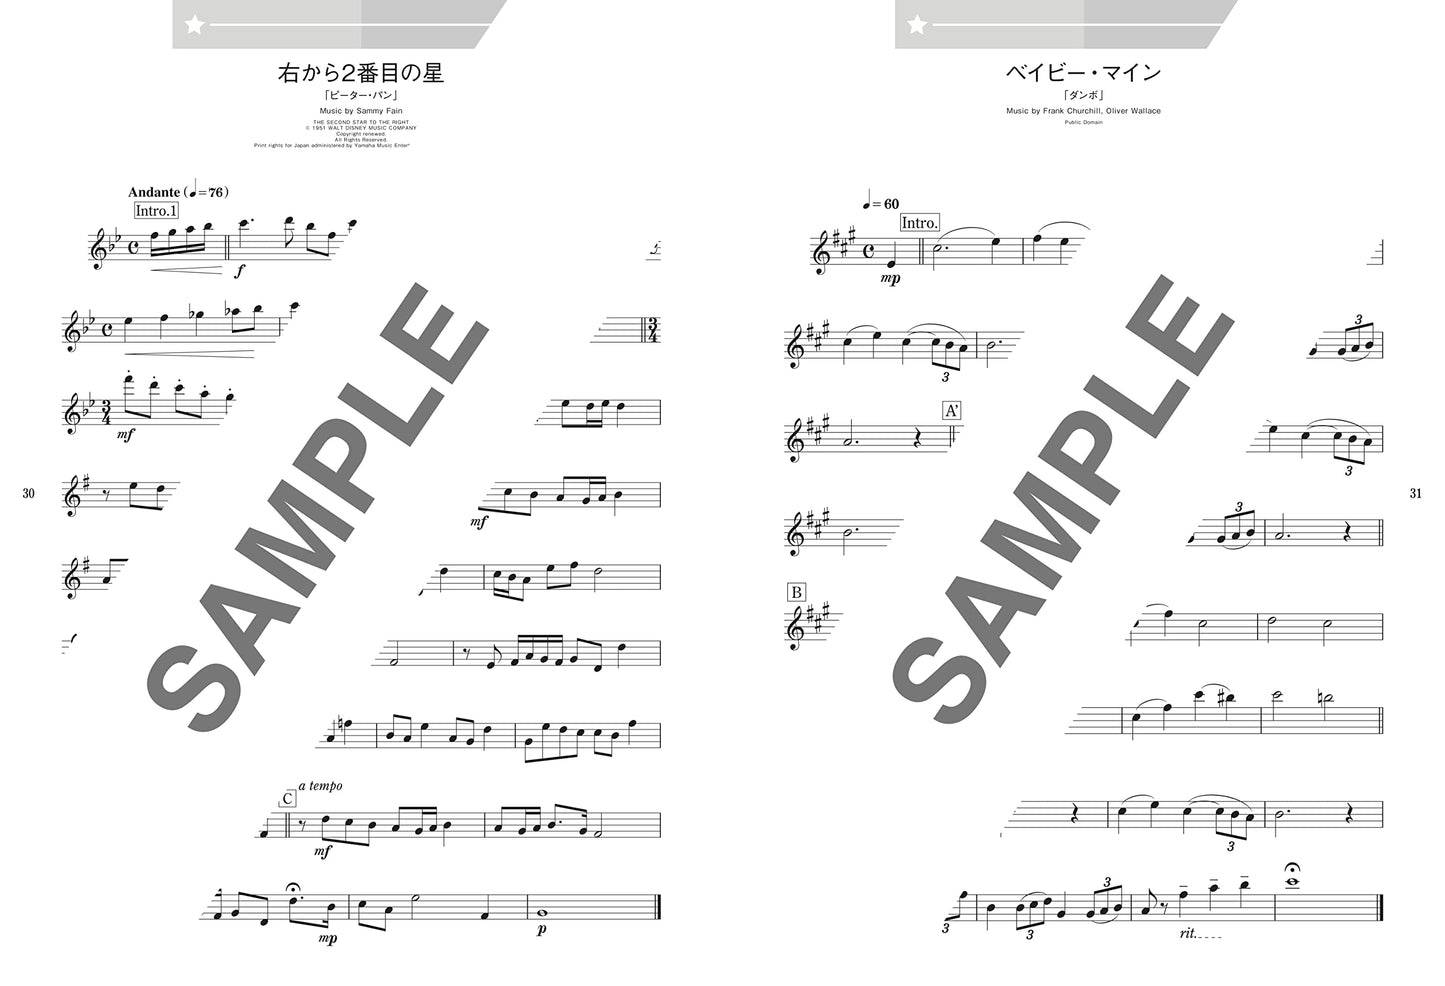 Disney Masterpiece Collection Flute Solo(Upper-Intermediate) Sheet Music Book